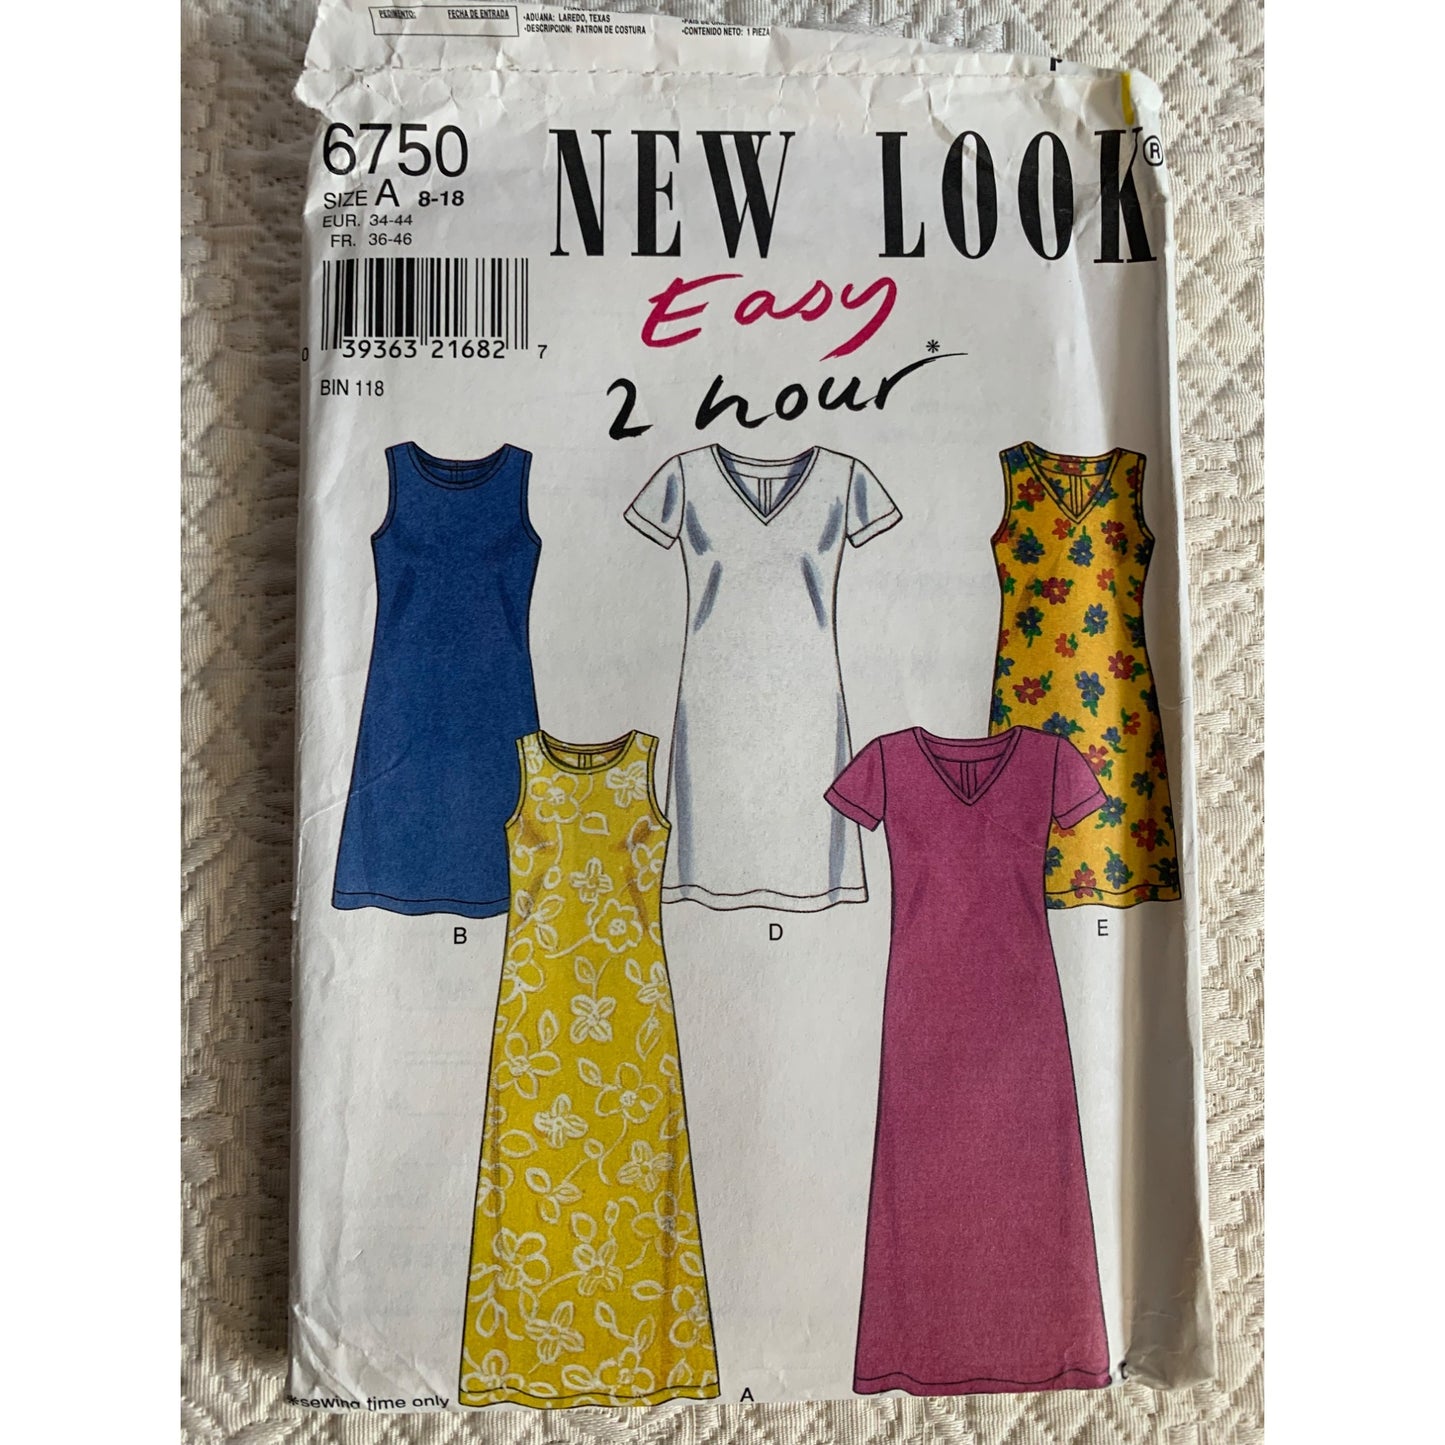 New Look Womens Dress Pattern 6750  sz 8 - 18 - uncut